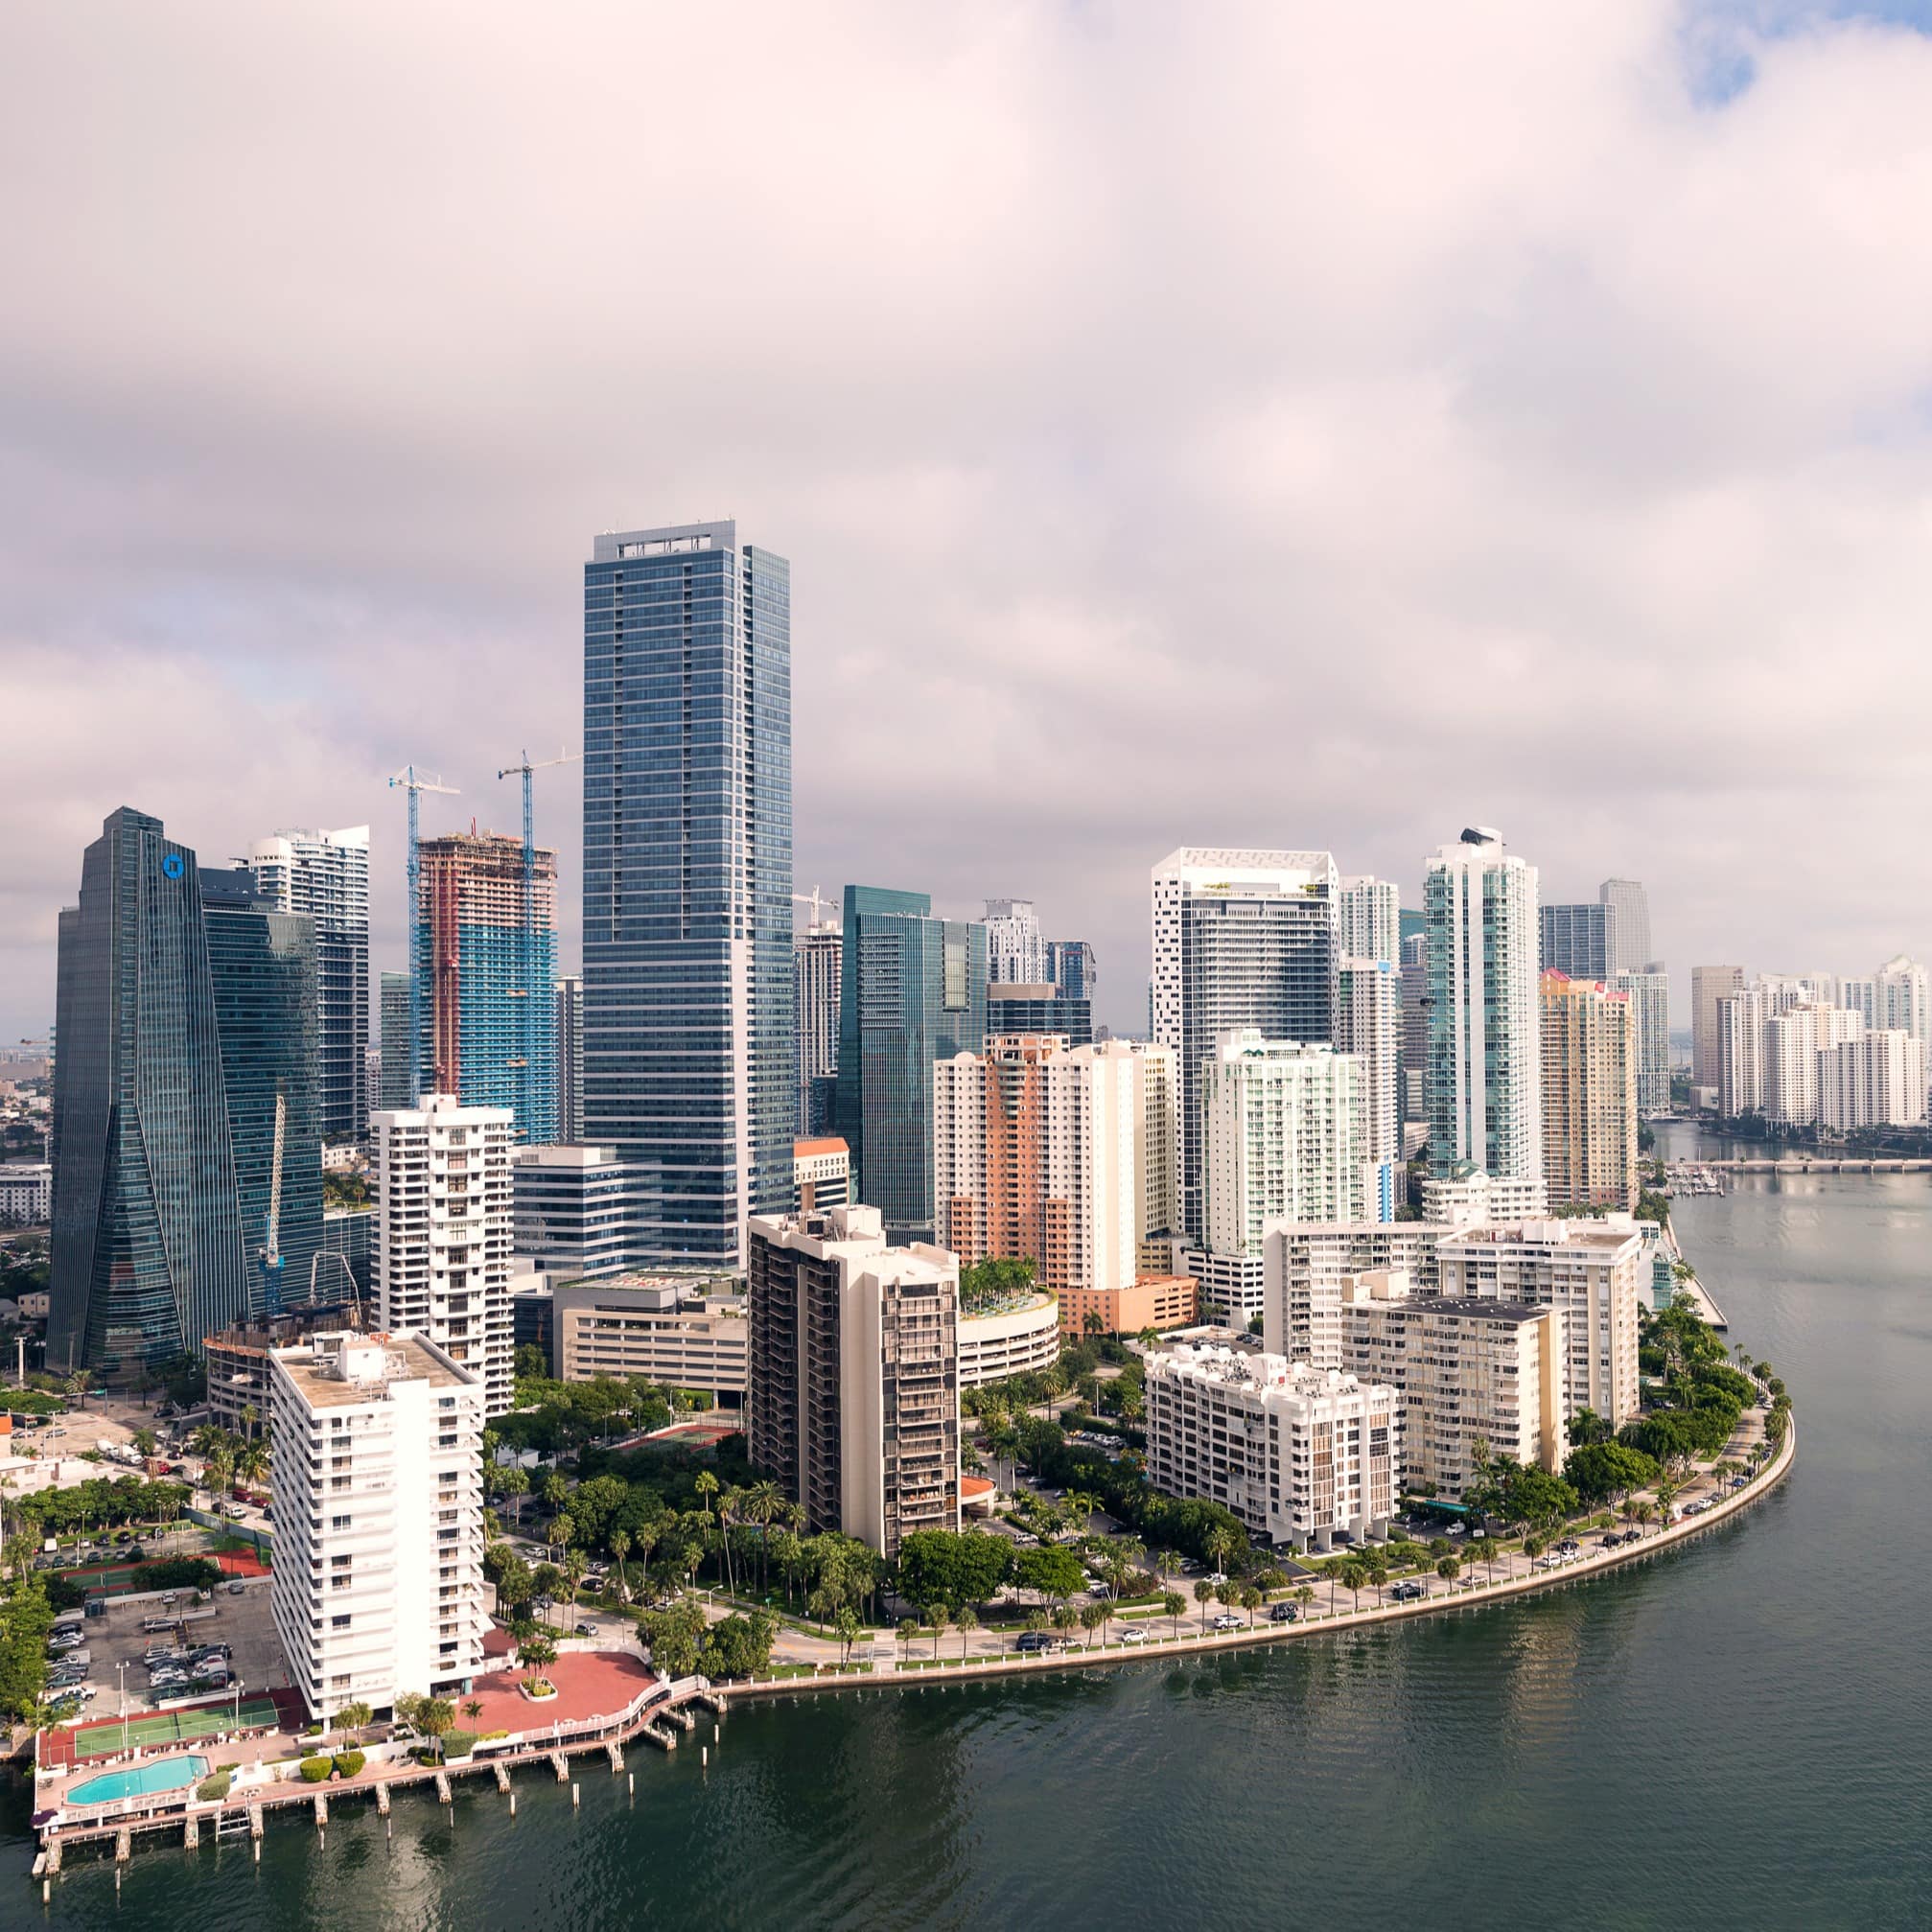 Miami skyline on the coast